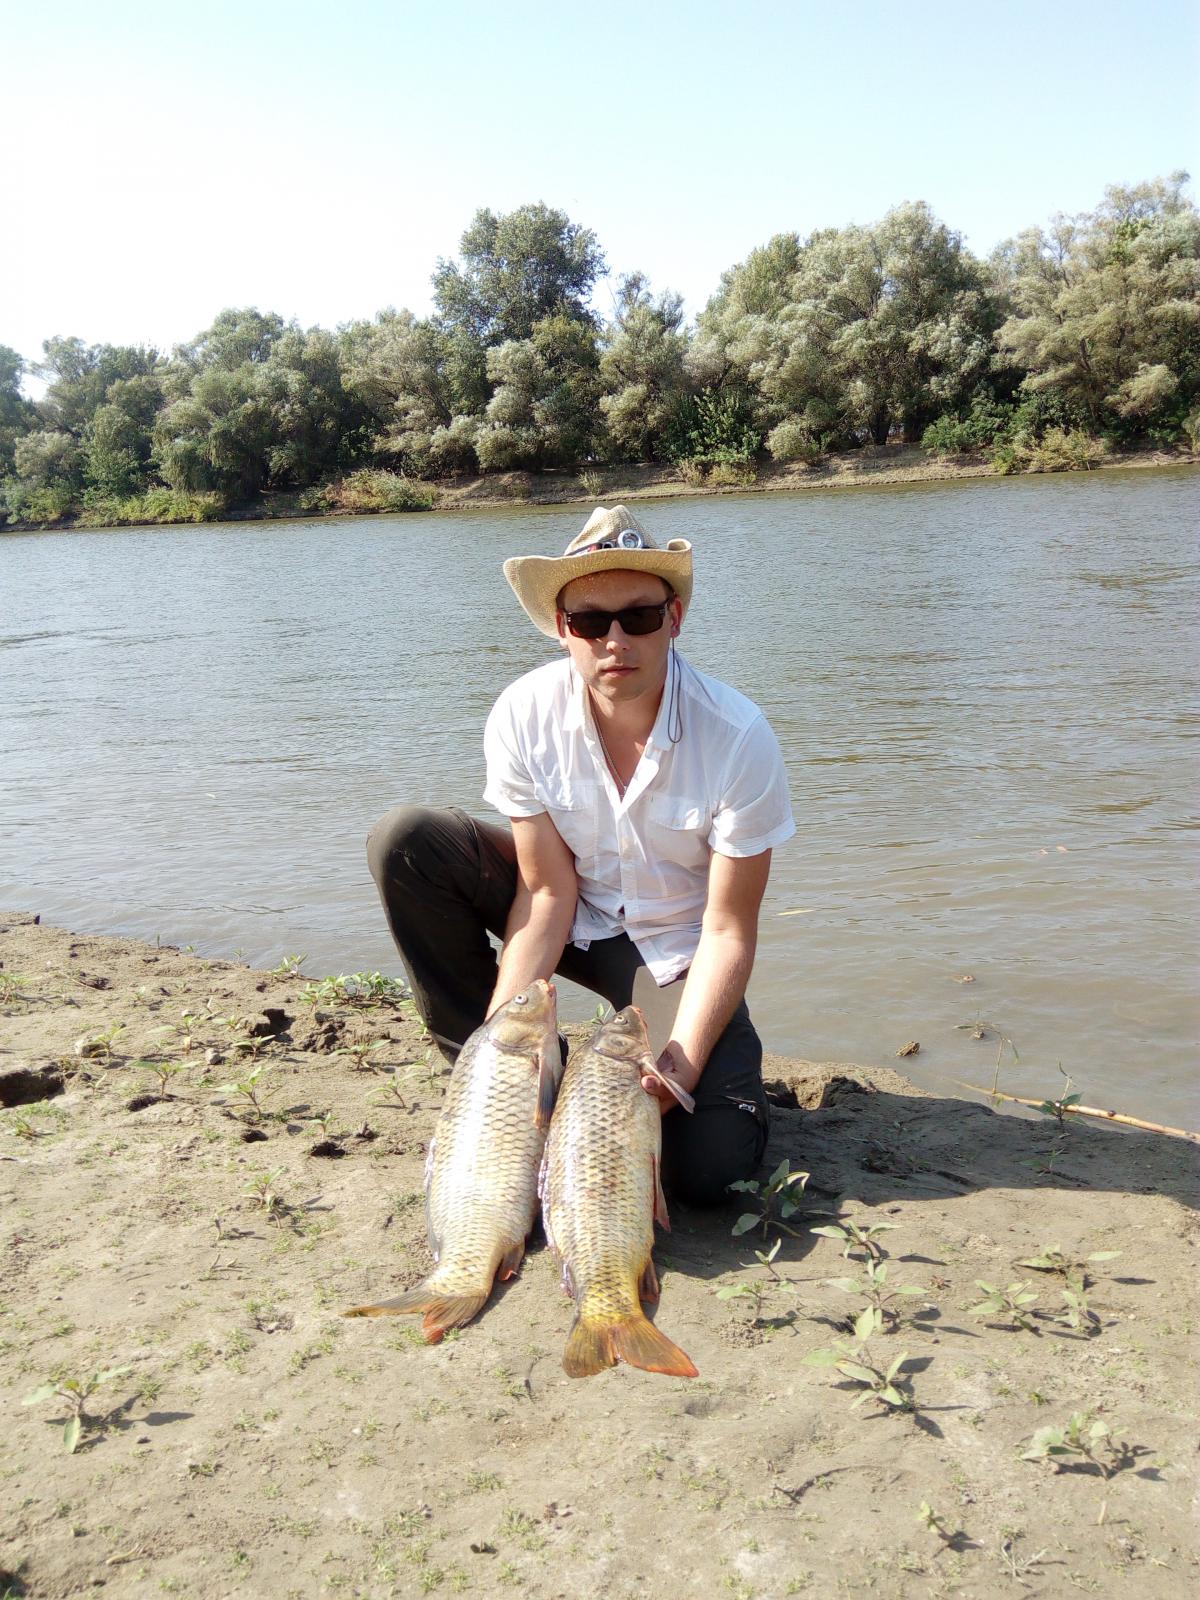 Река кигач астраханская область. Астрахань река Кигач. Село Бузан Астраханская область. Рыбалка на реке Кигач. Астрахань Кигач рыбалка.